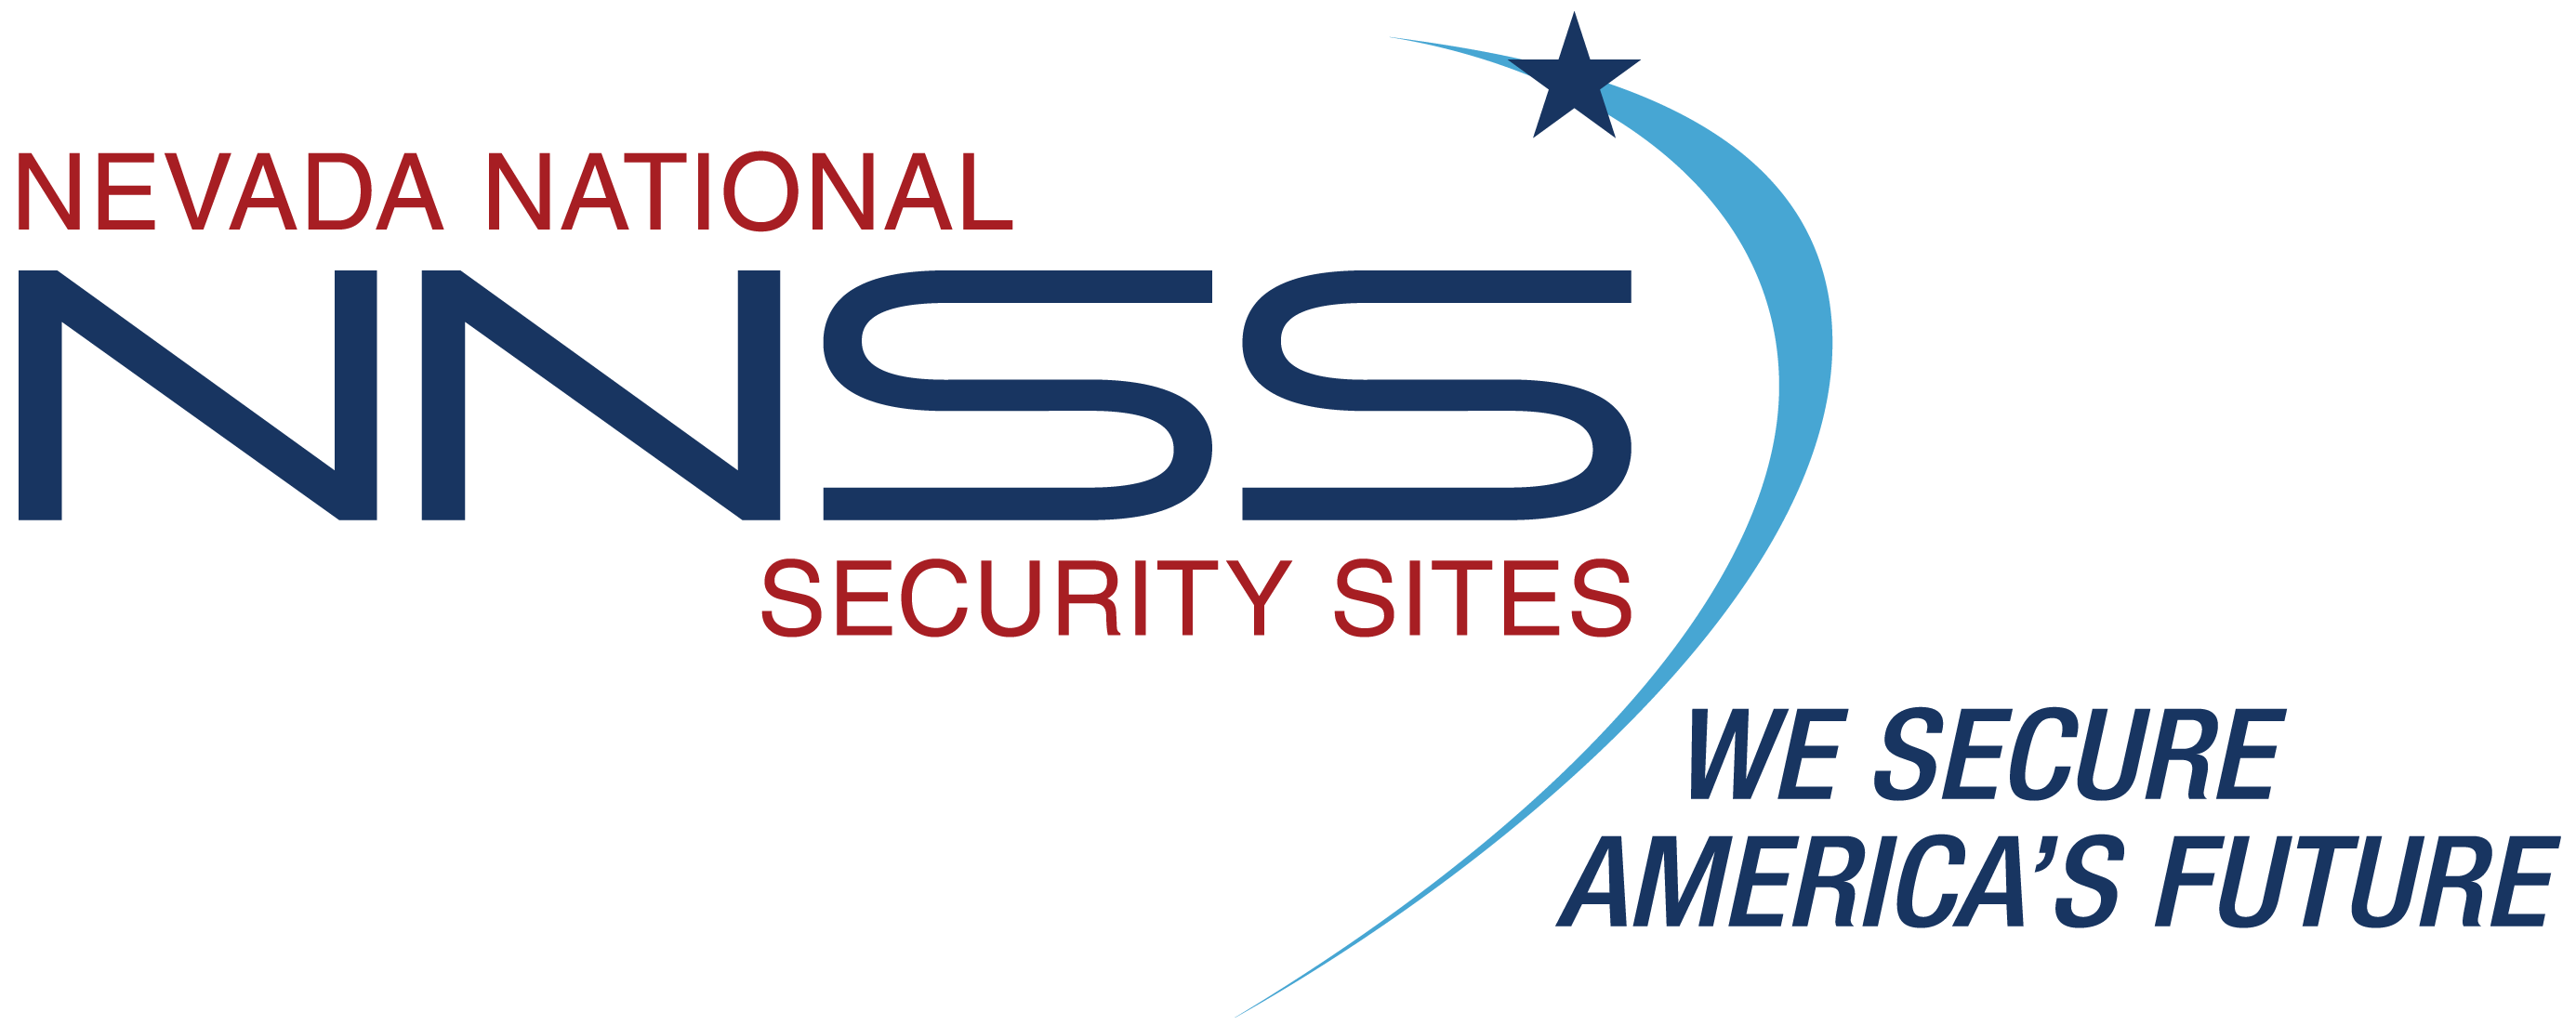 Nevada National Security Sites logo